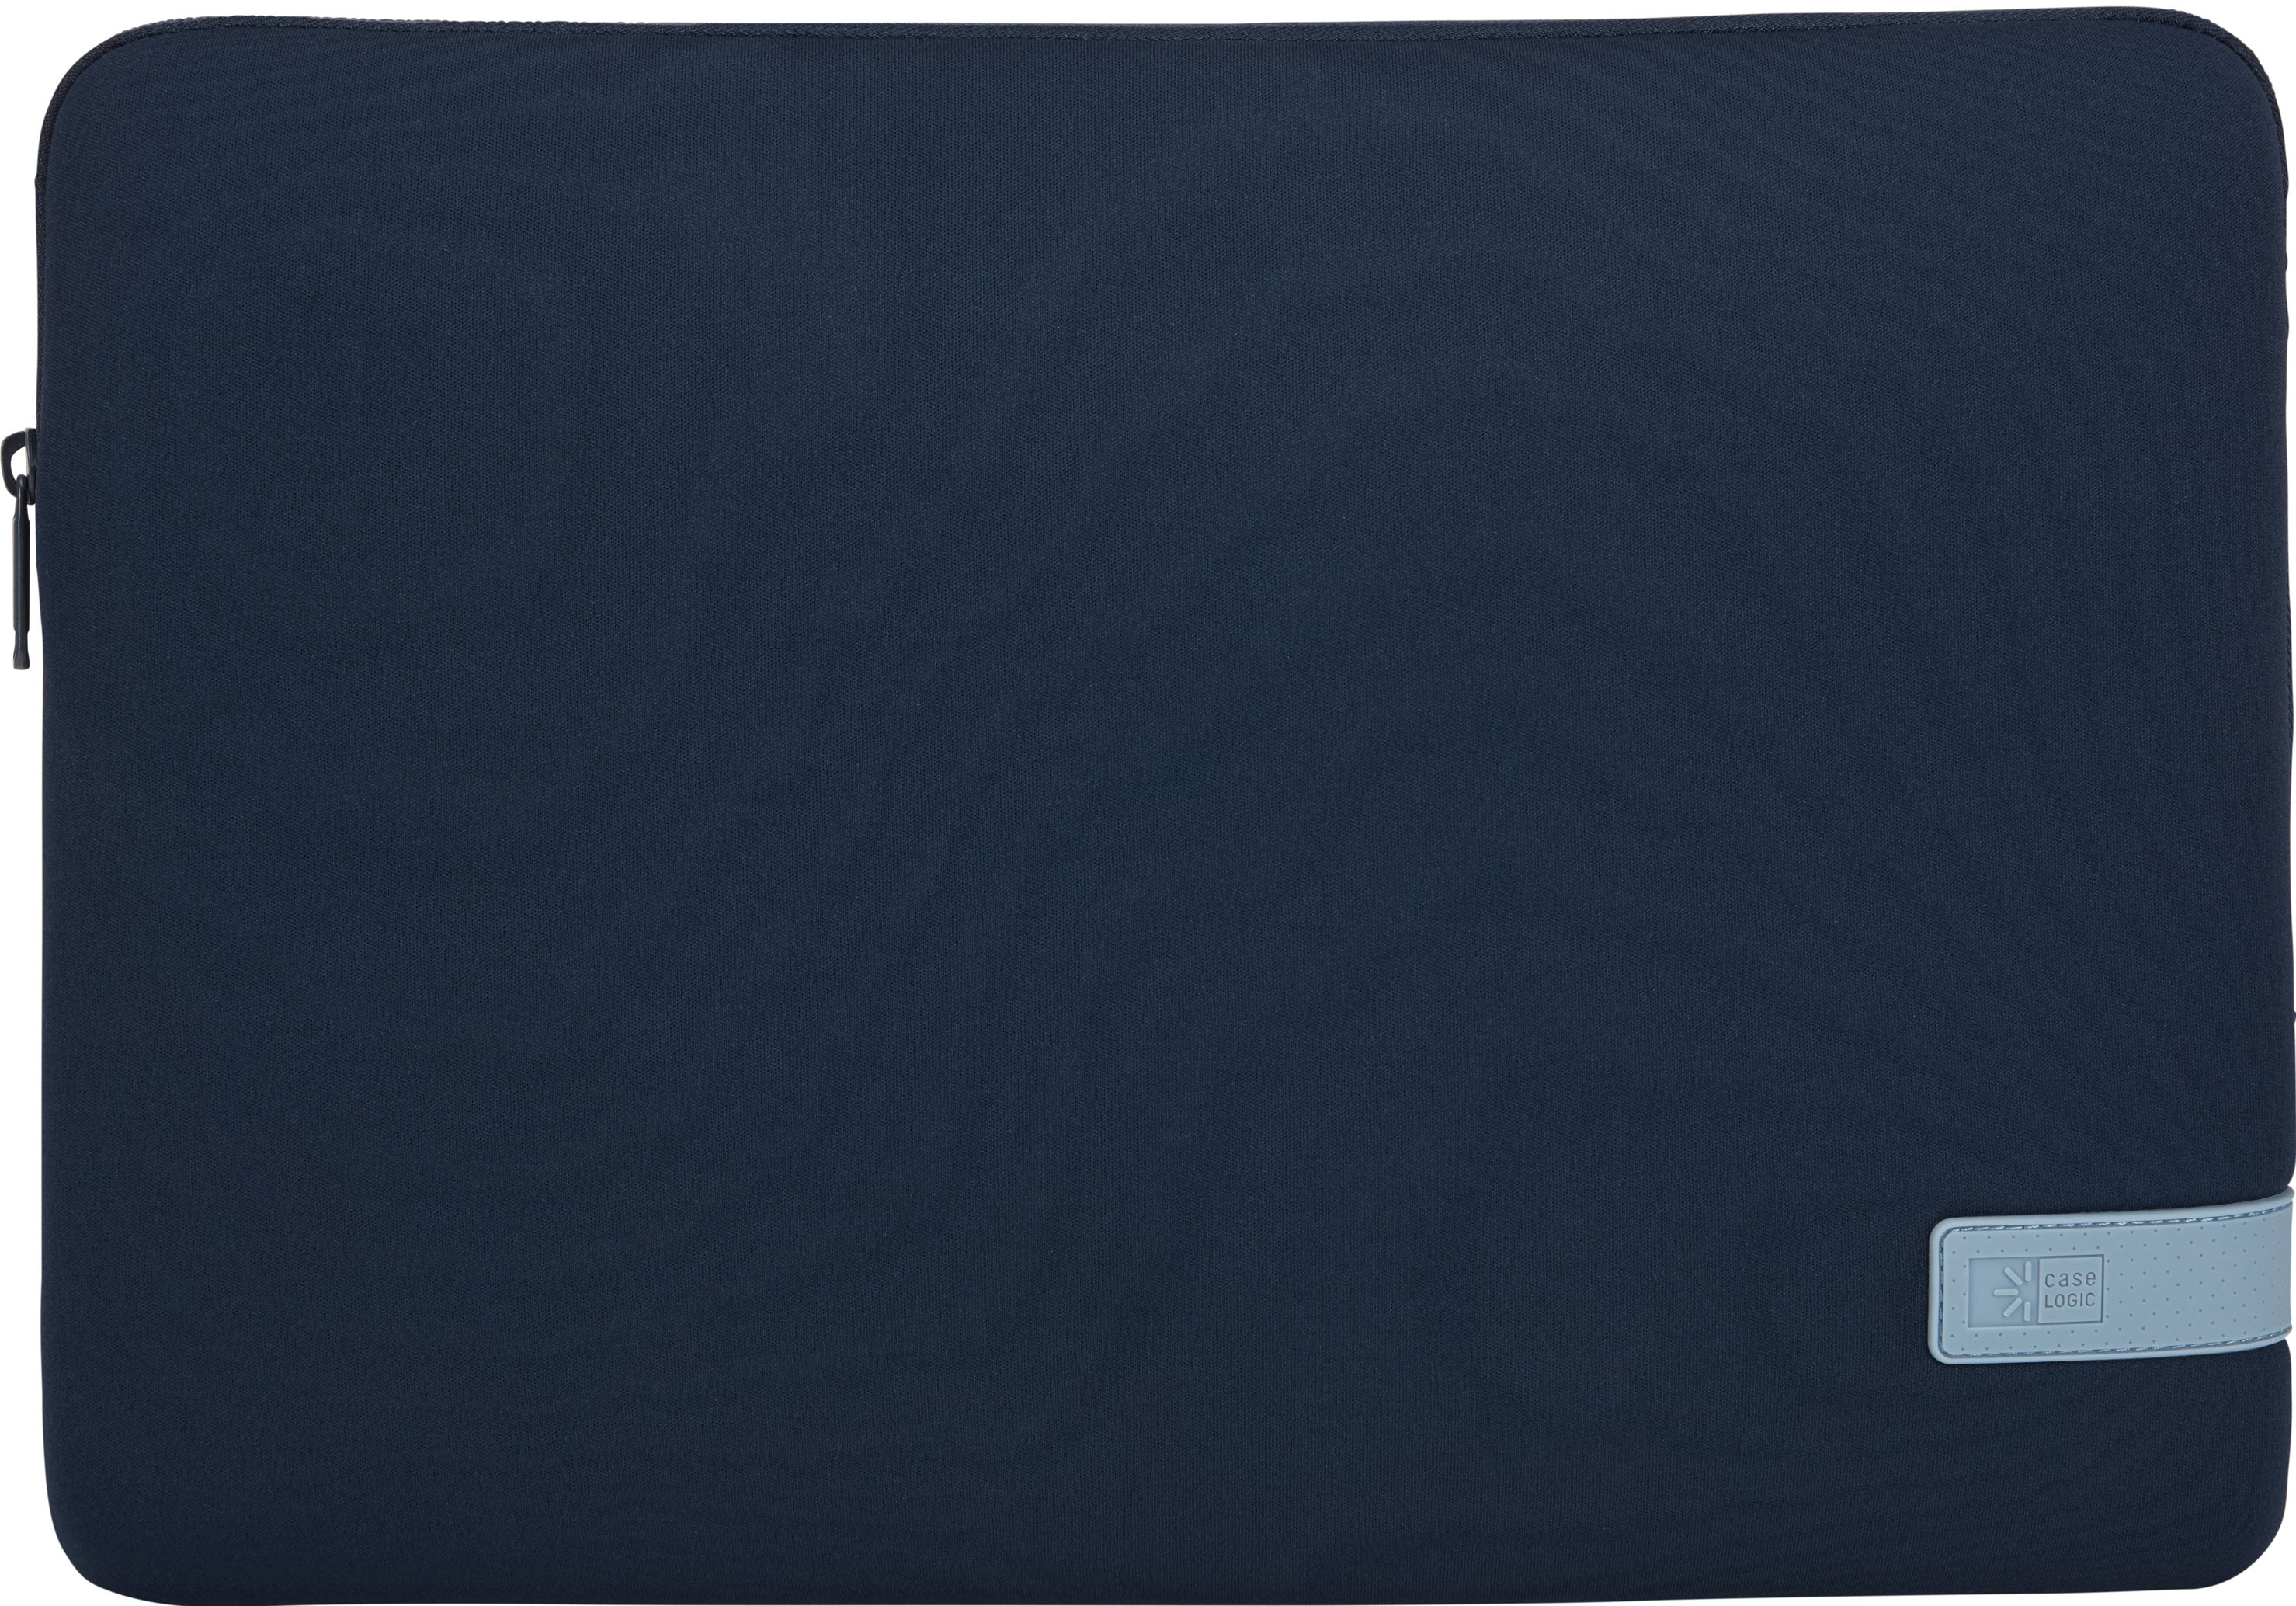 CASE LOGIC Reflect Laptop Sleeve 15.6 p. 407652 bleu foncé